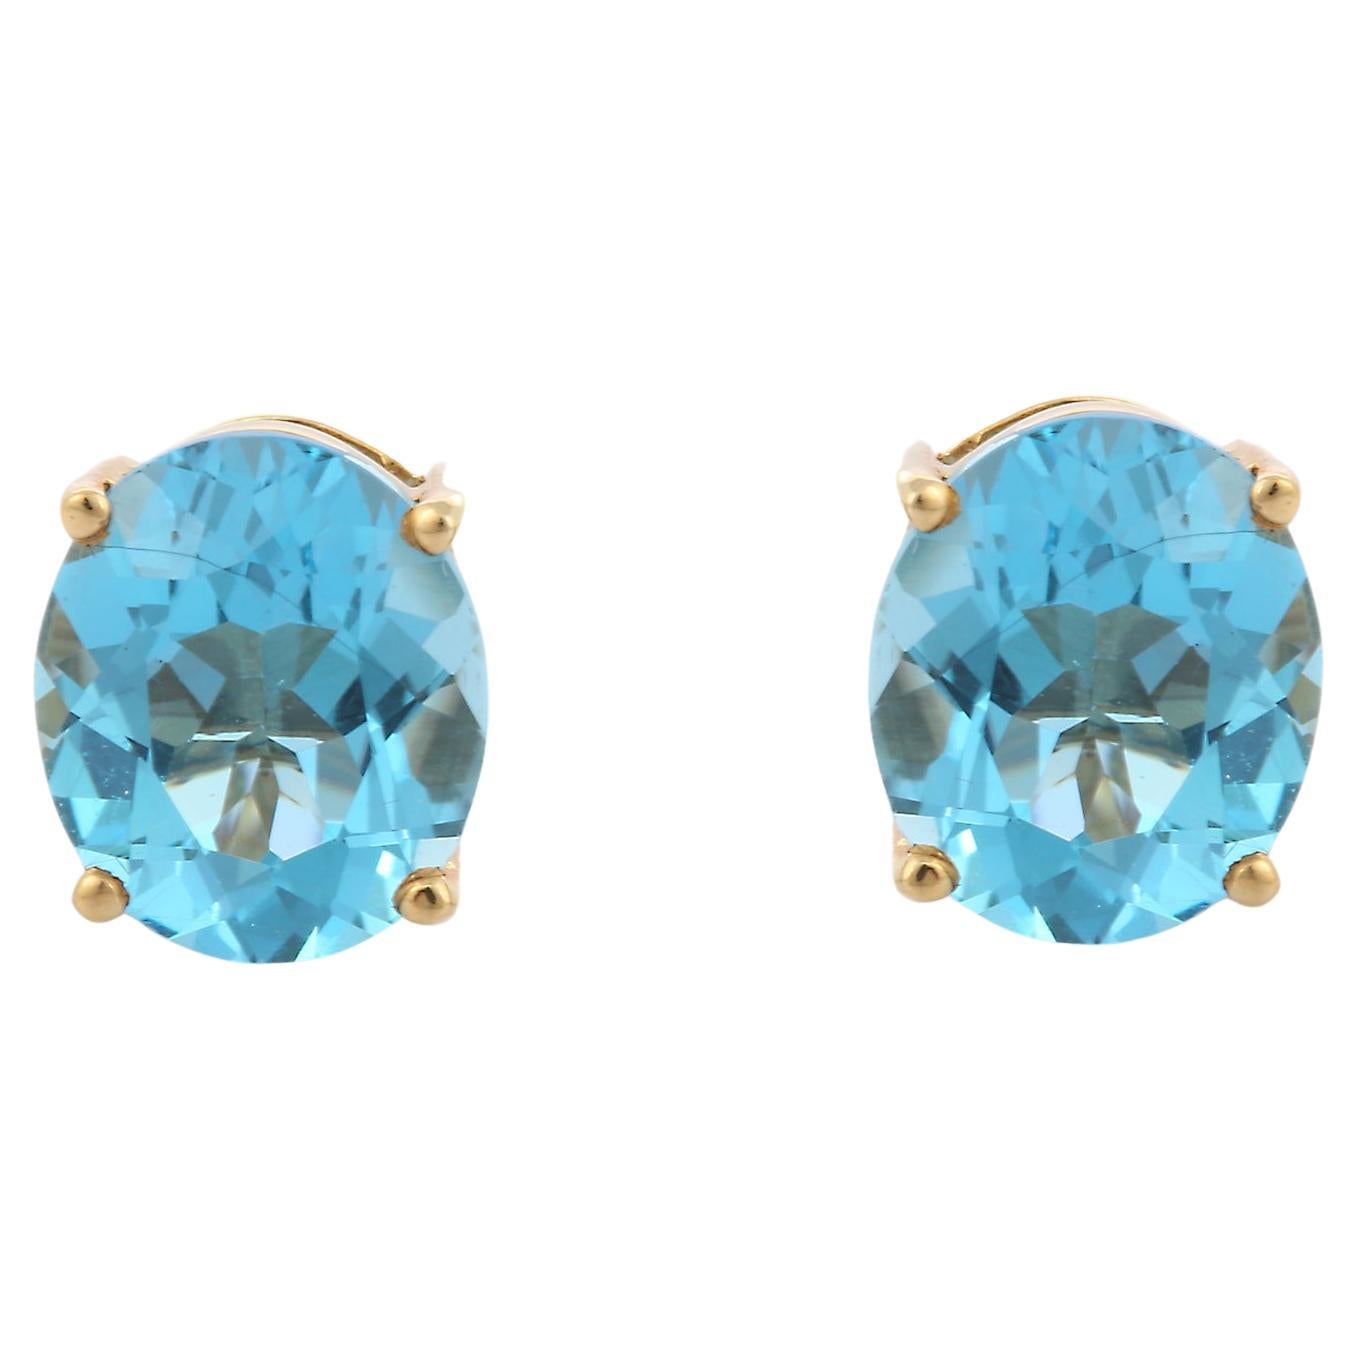 11 Ct Oval Cut Prong Set Blue Topaz Stud Earrings in 10K Yellow Gold 